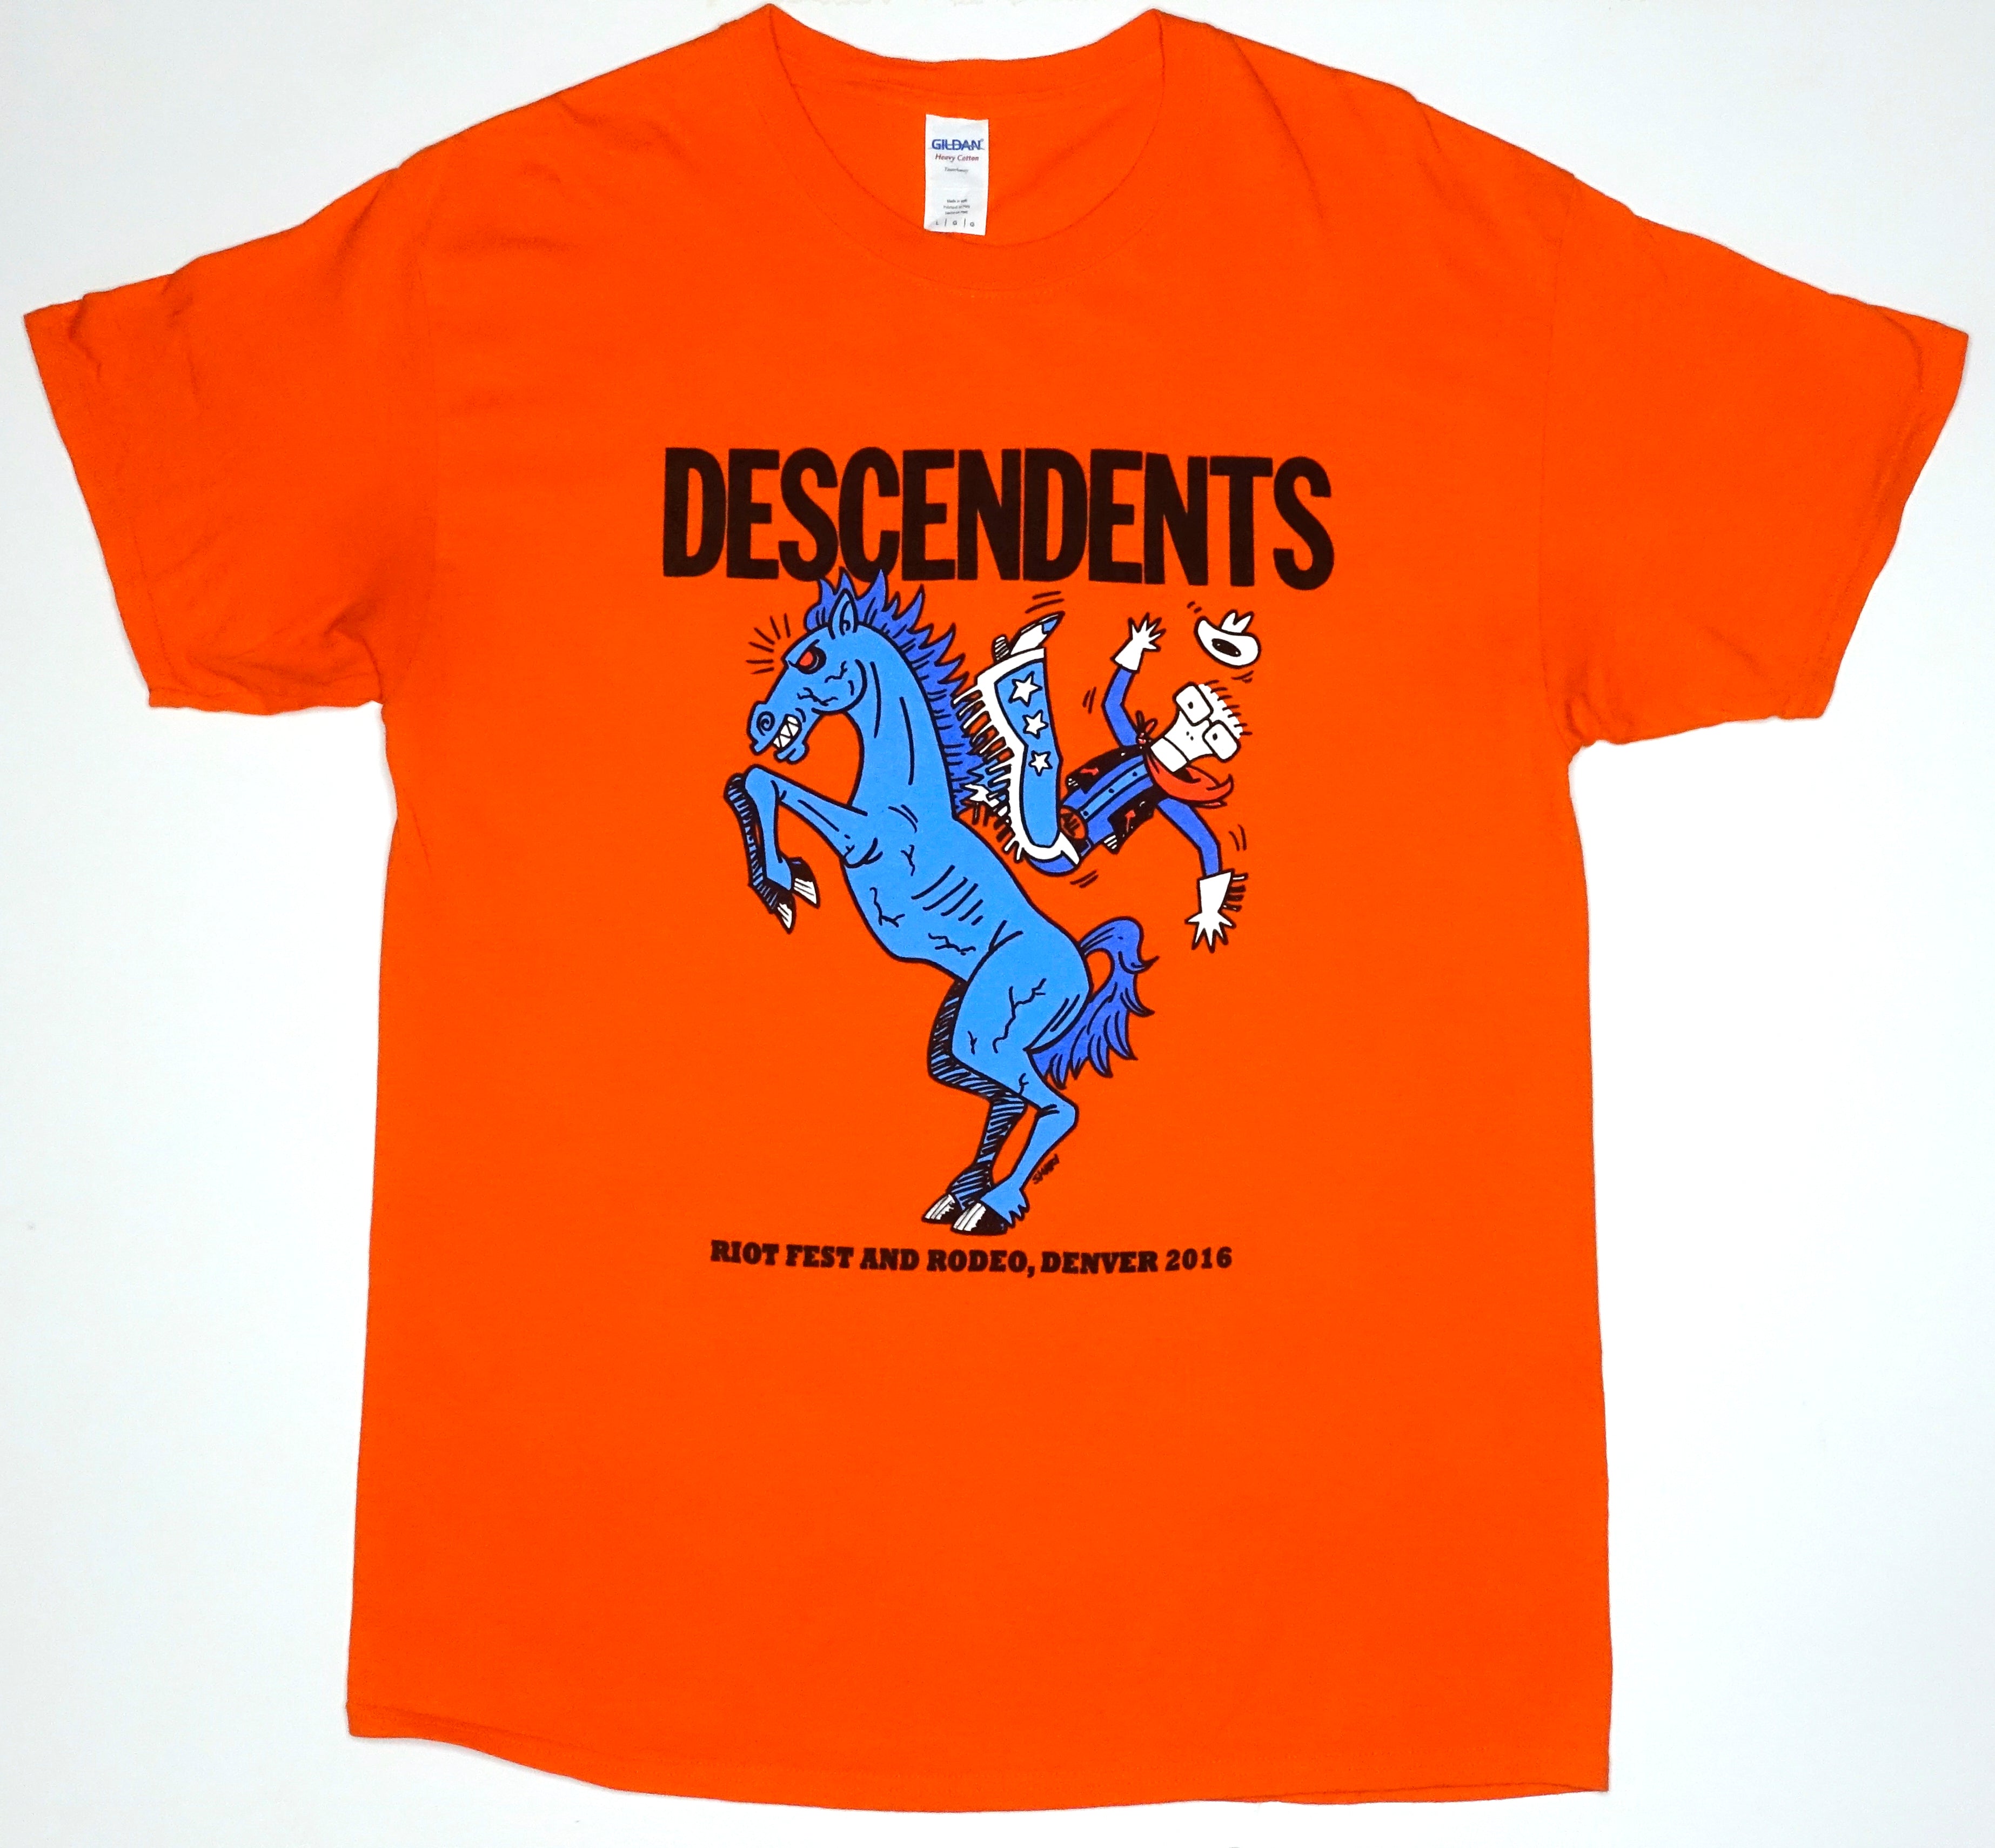 Descendents - Denver Riot Fest and Rodeo 2016 Tour Shirt Size Large